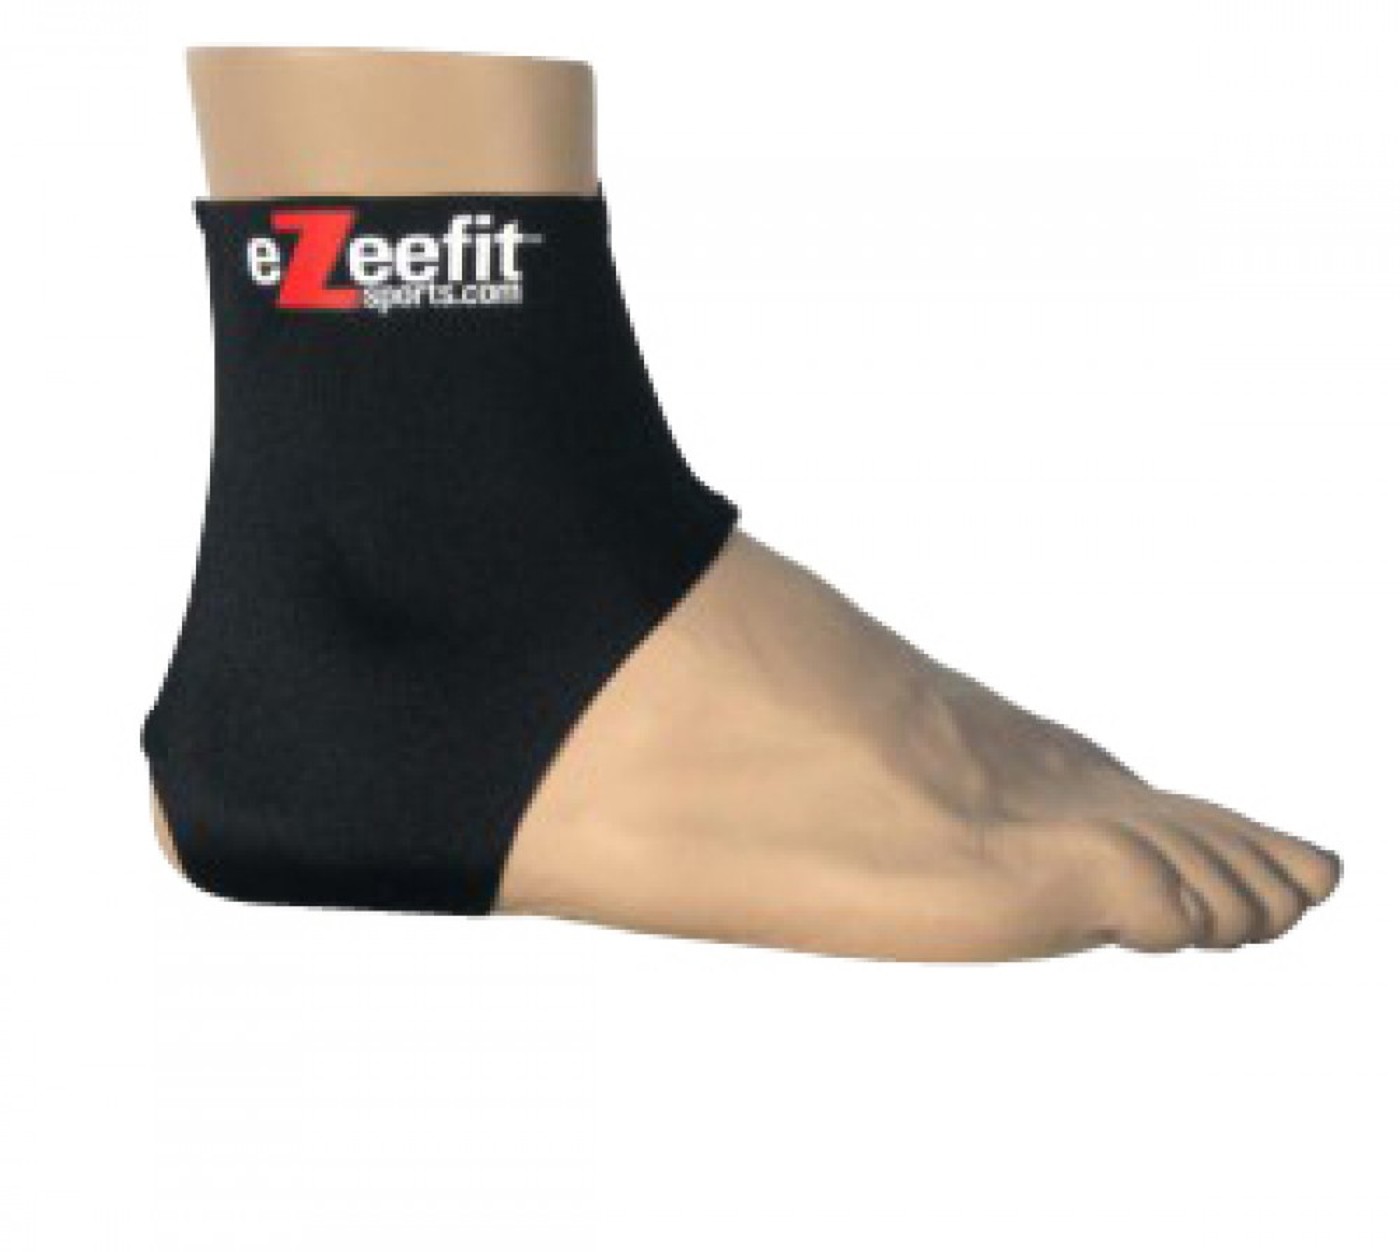 EZEEFIT ankle Booties ultrathin